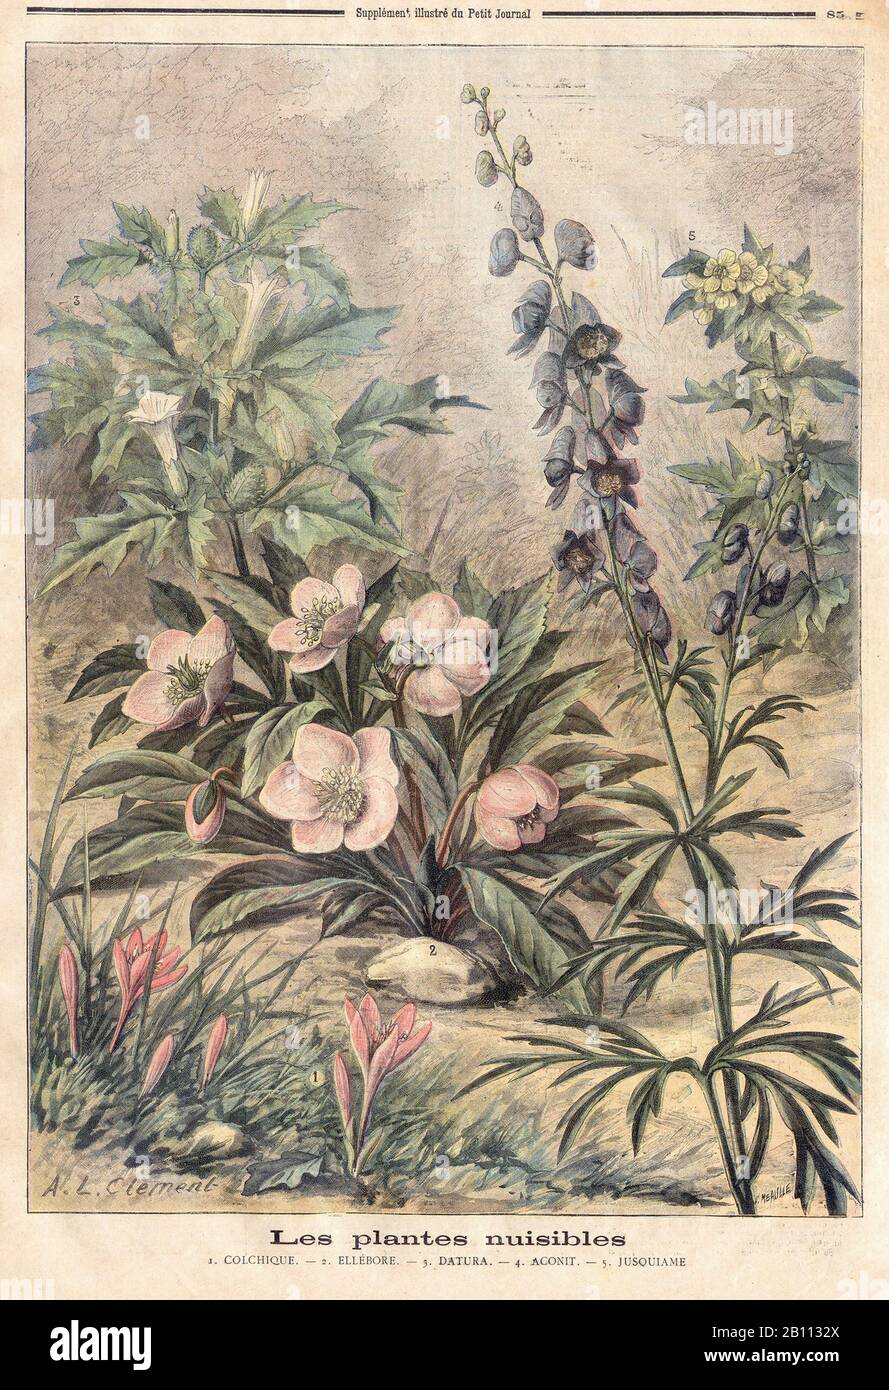 Les plantes nuevos J. COLCHIQUE. — 2. ELLÉBORE. DATO. — 4. ACONIT. — Jusquiame - En El Periódico Francés "Le Petit Journal" - Foto de stock